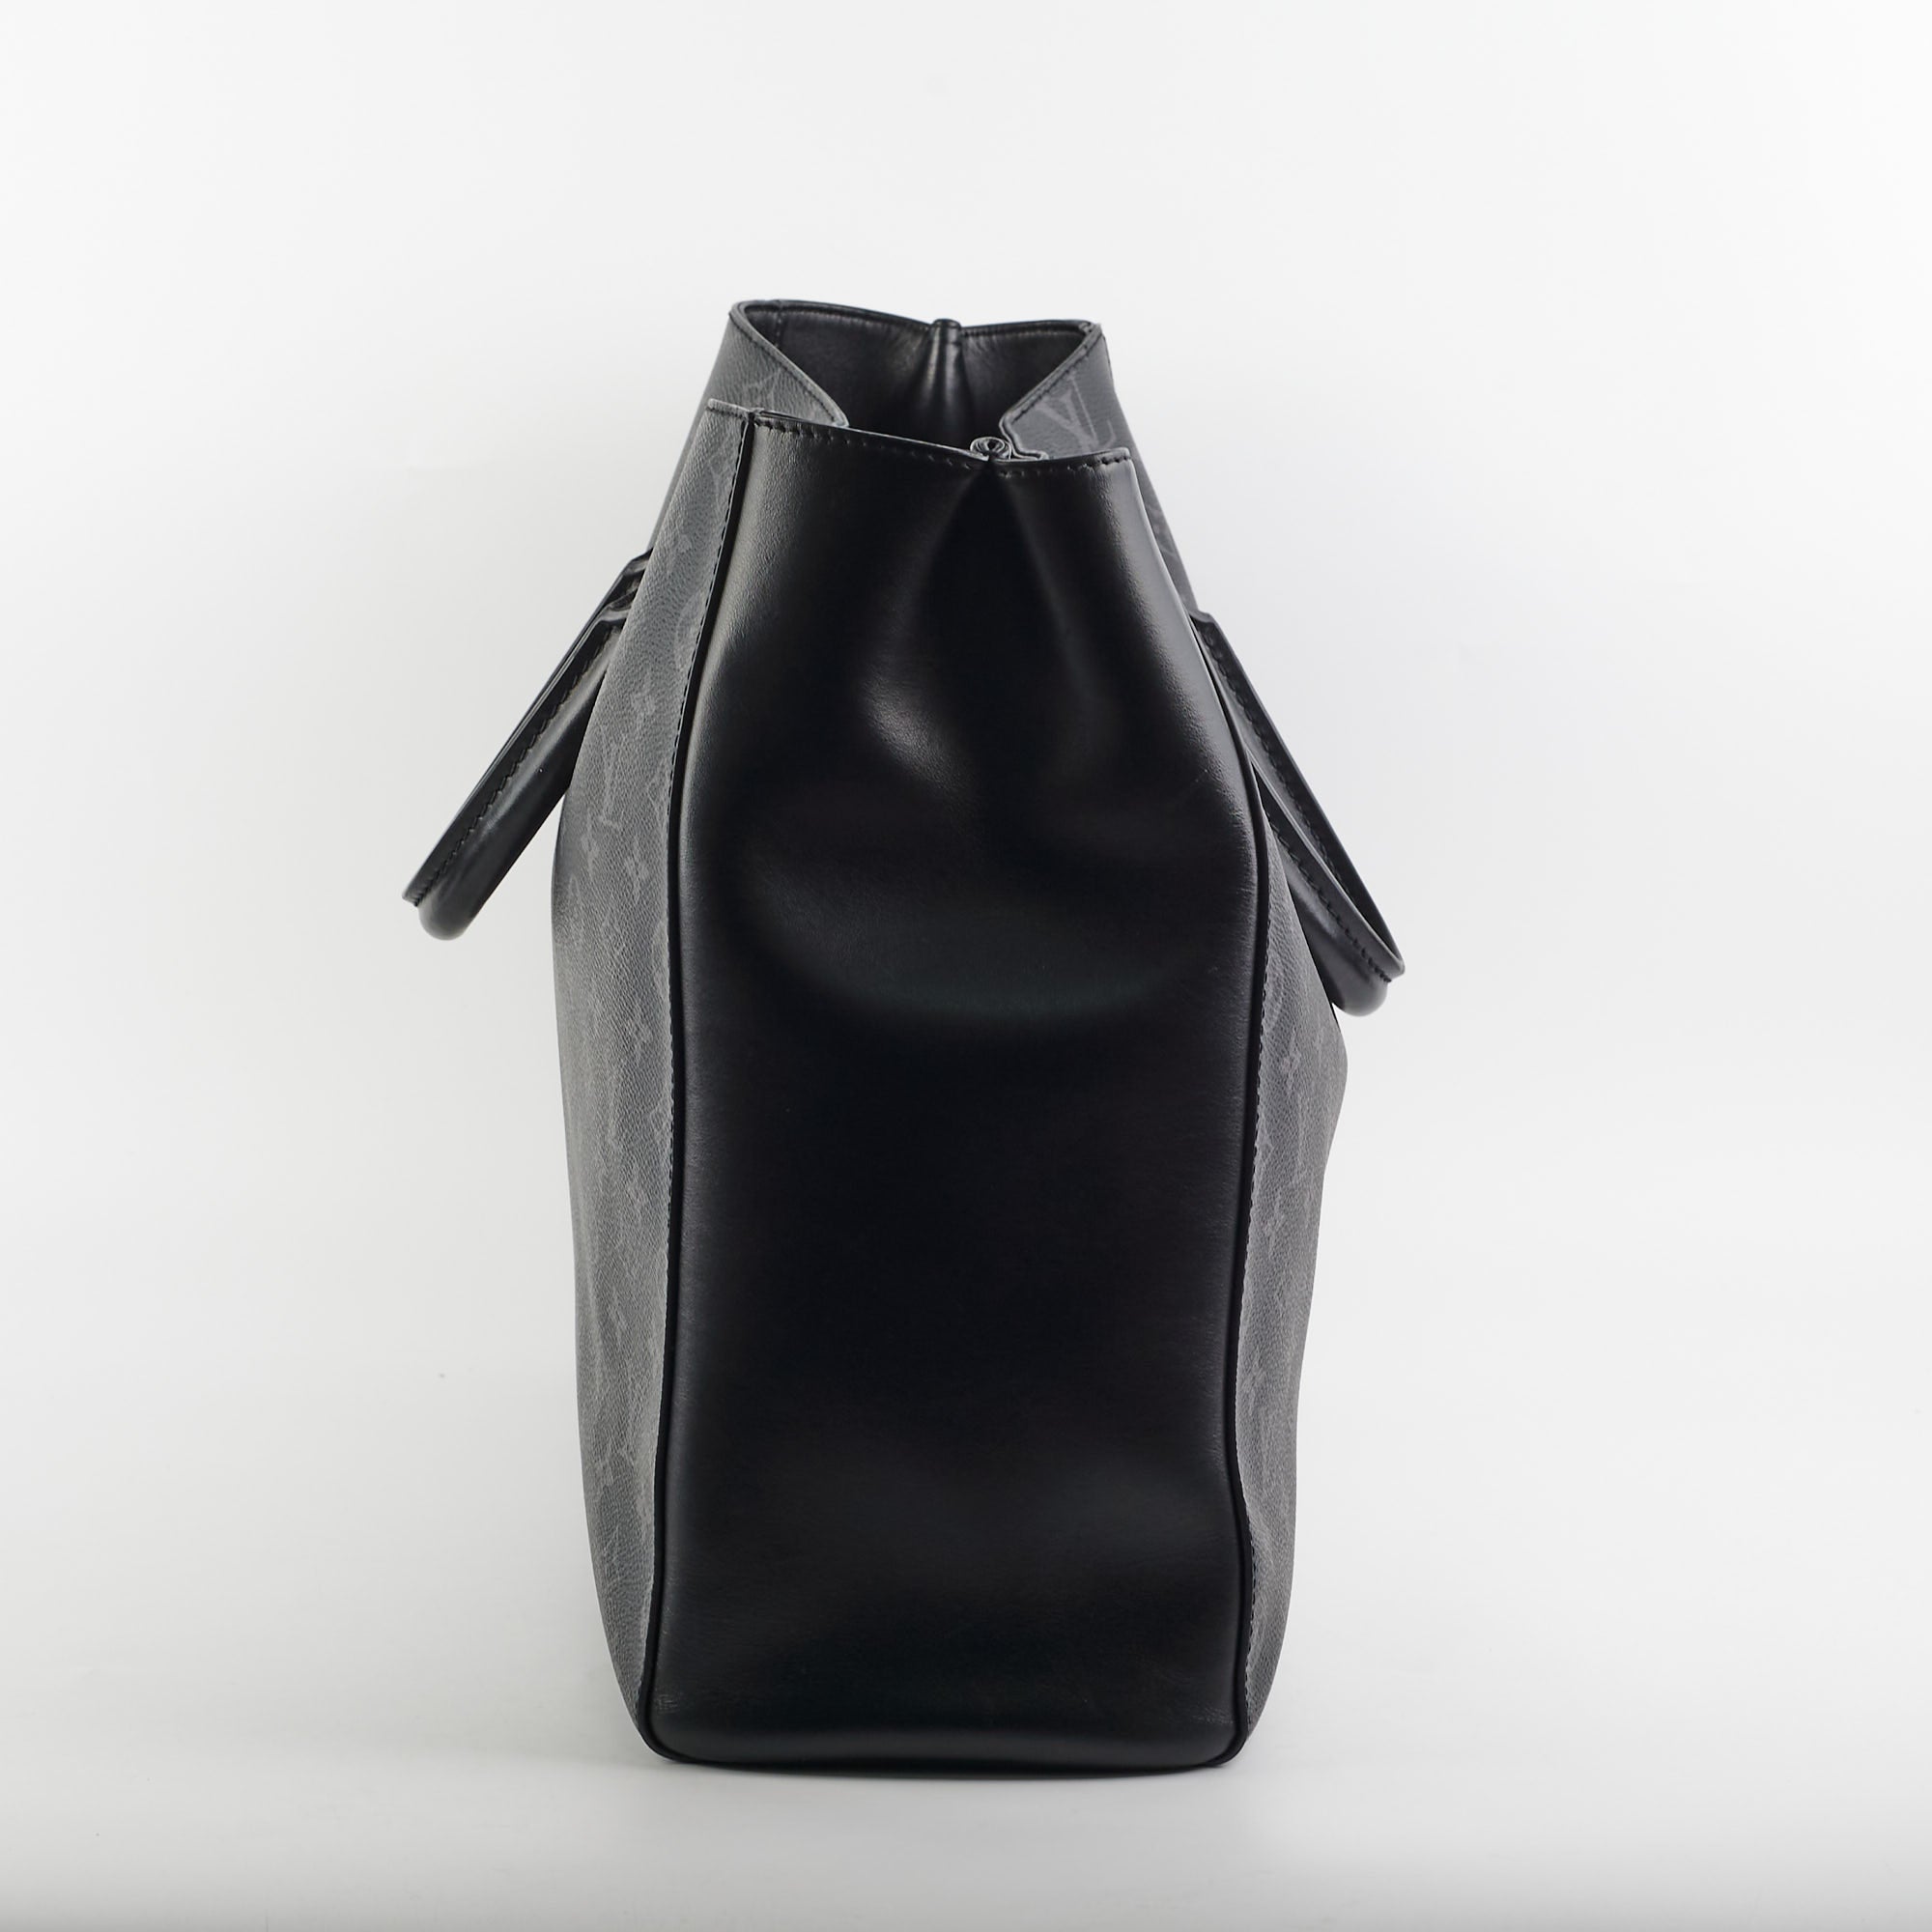 ❤️TOUR - Louis Vuitton Grand Sac Eclipse Monogram Tote / Satchel bag 